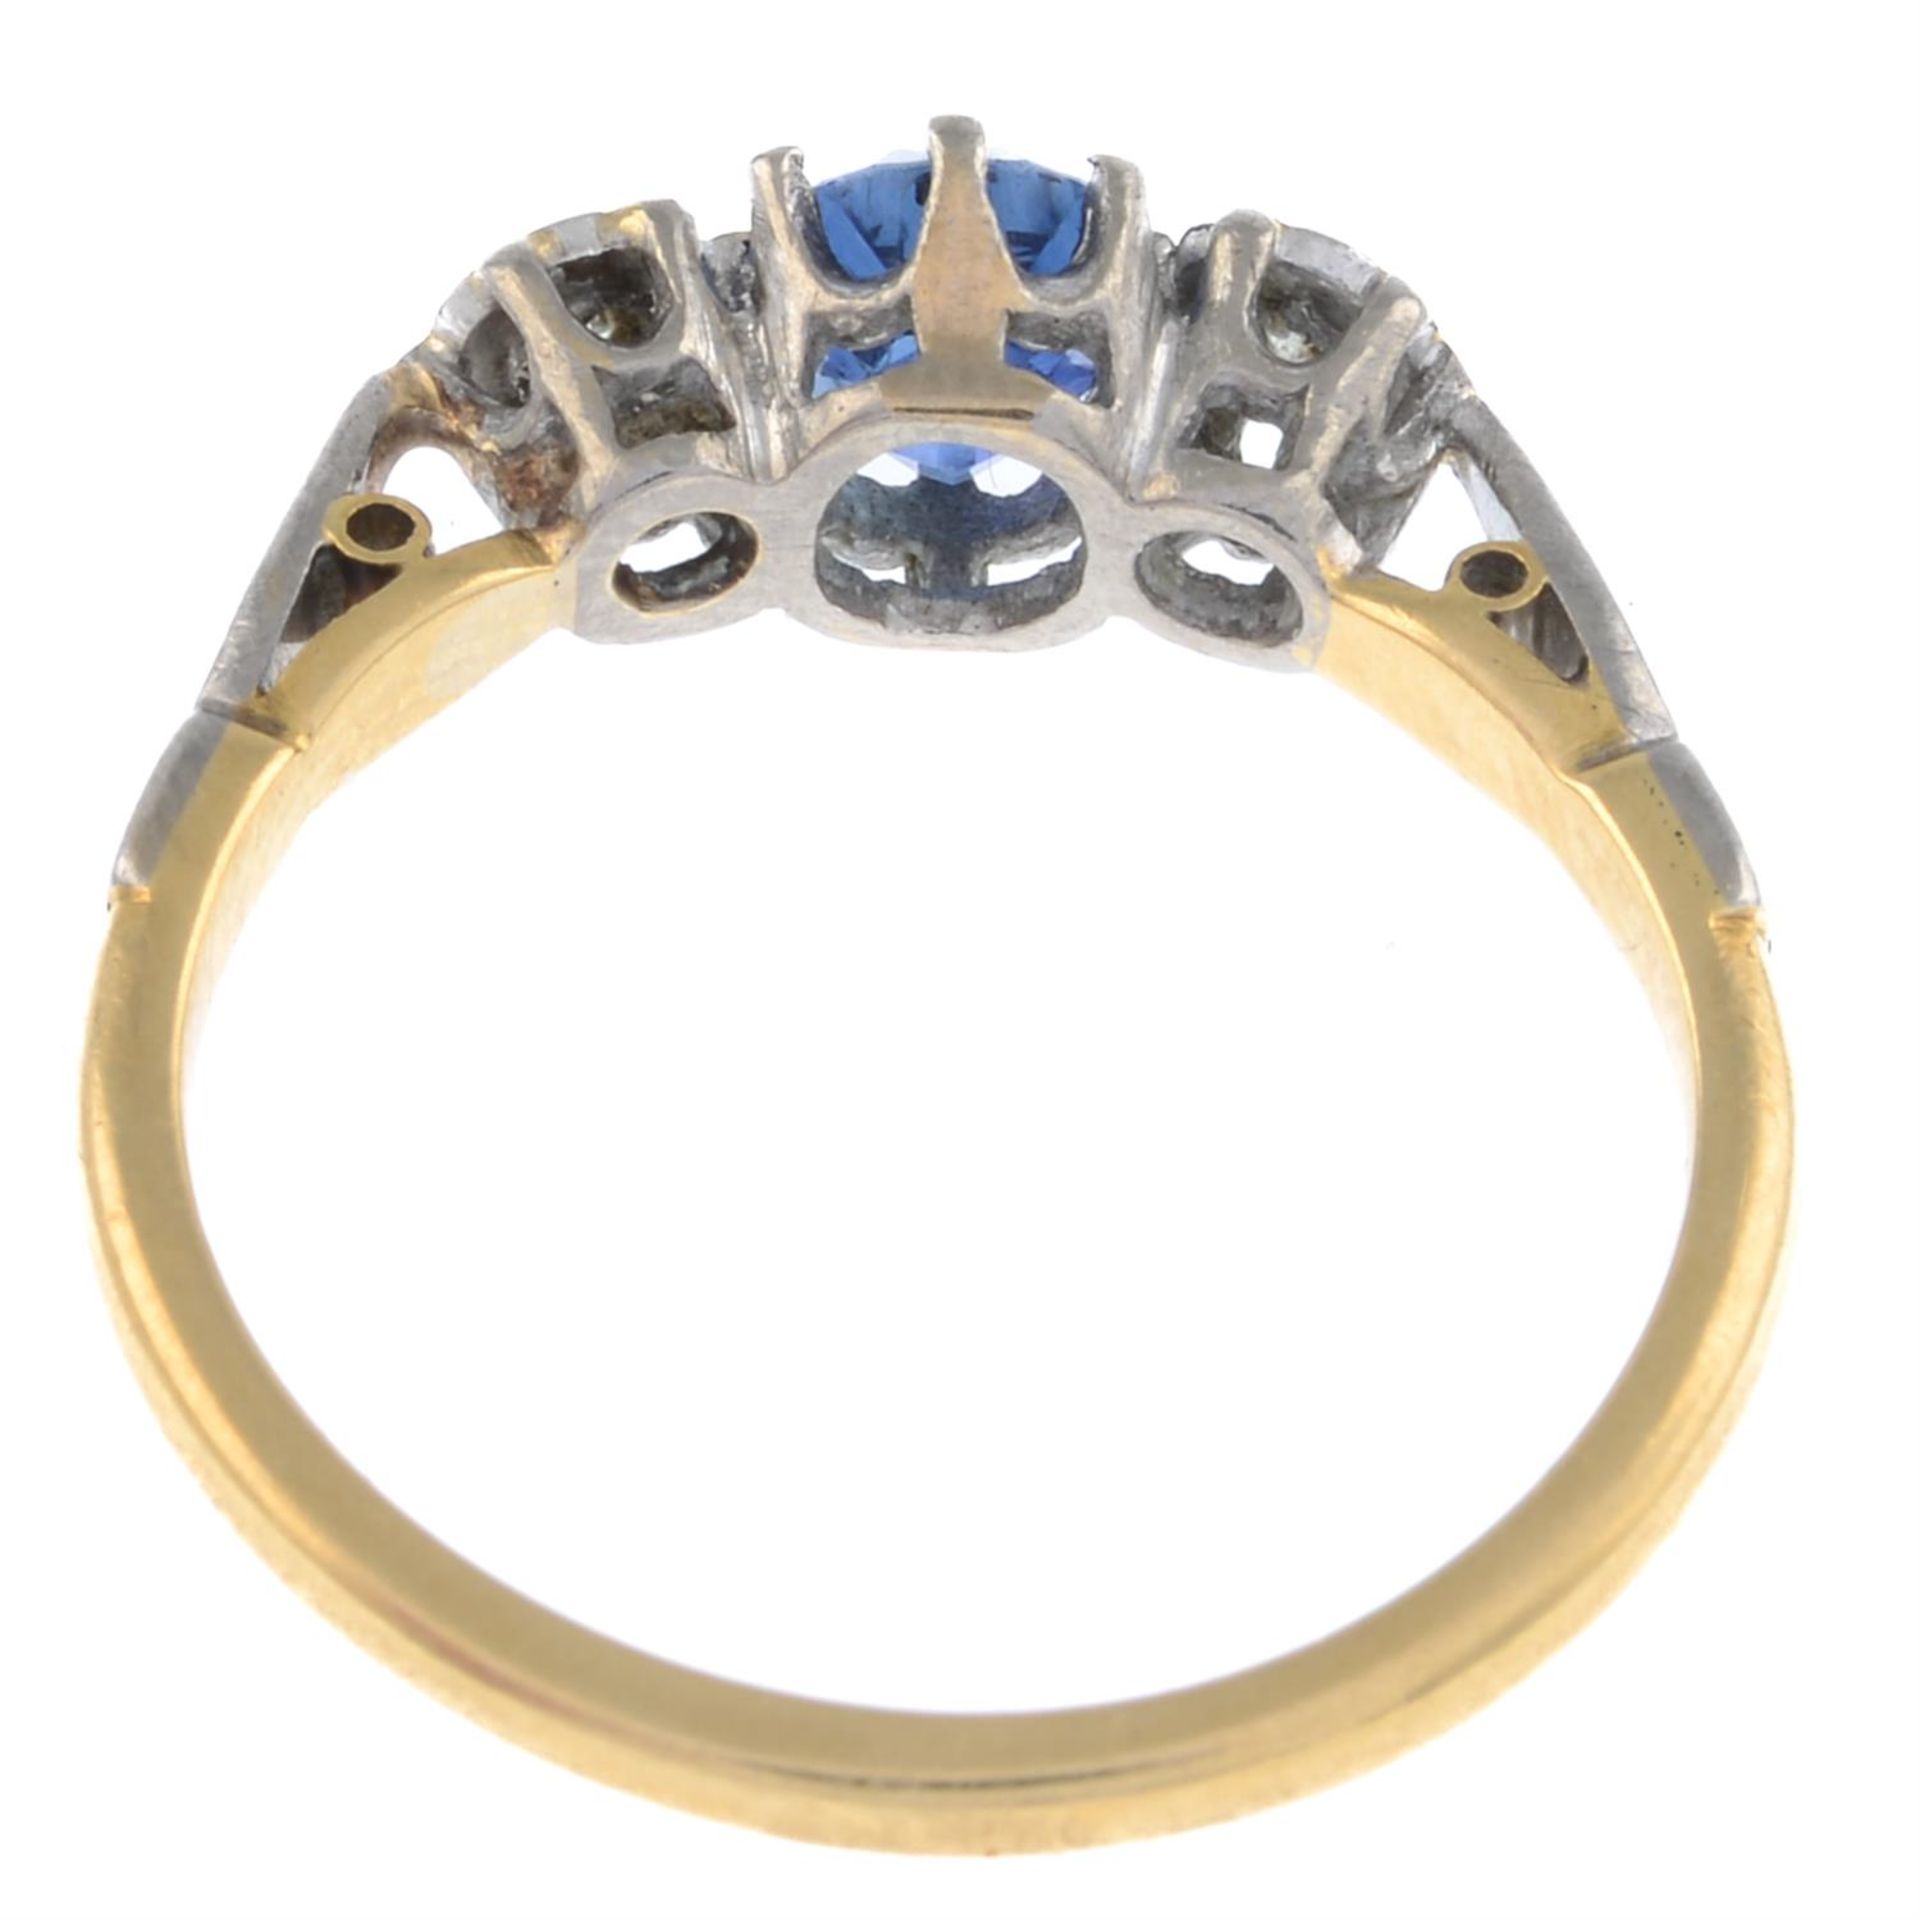 Mid 20th century 9ct gold sapphire & illusion-set diamond ring - Image 2 of 2